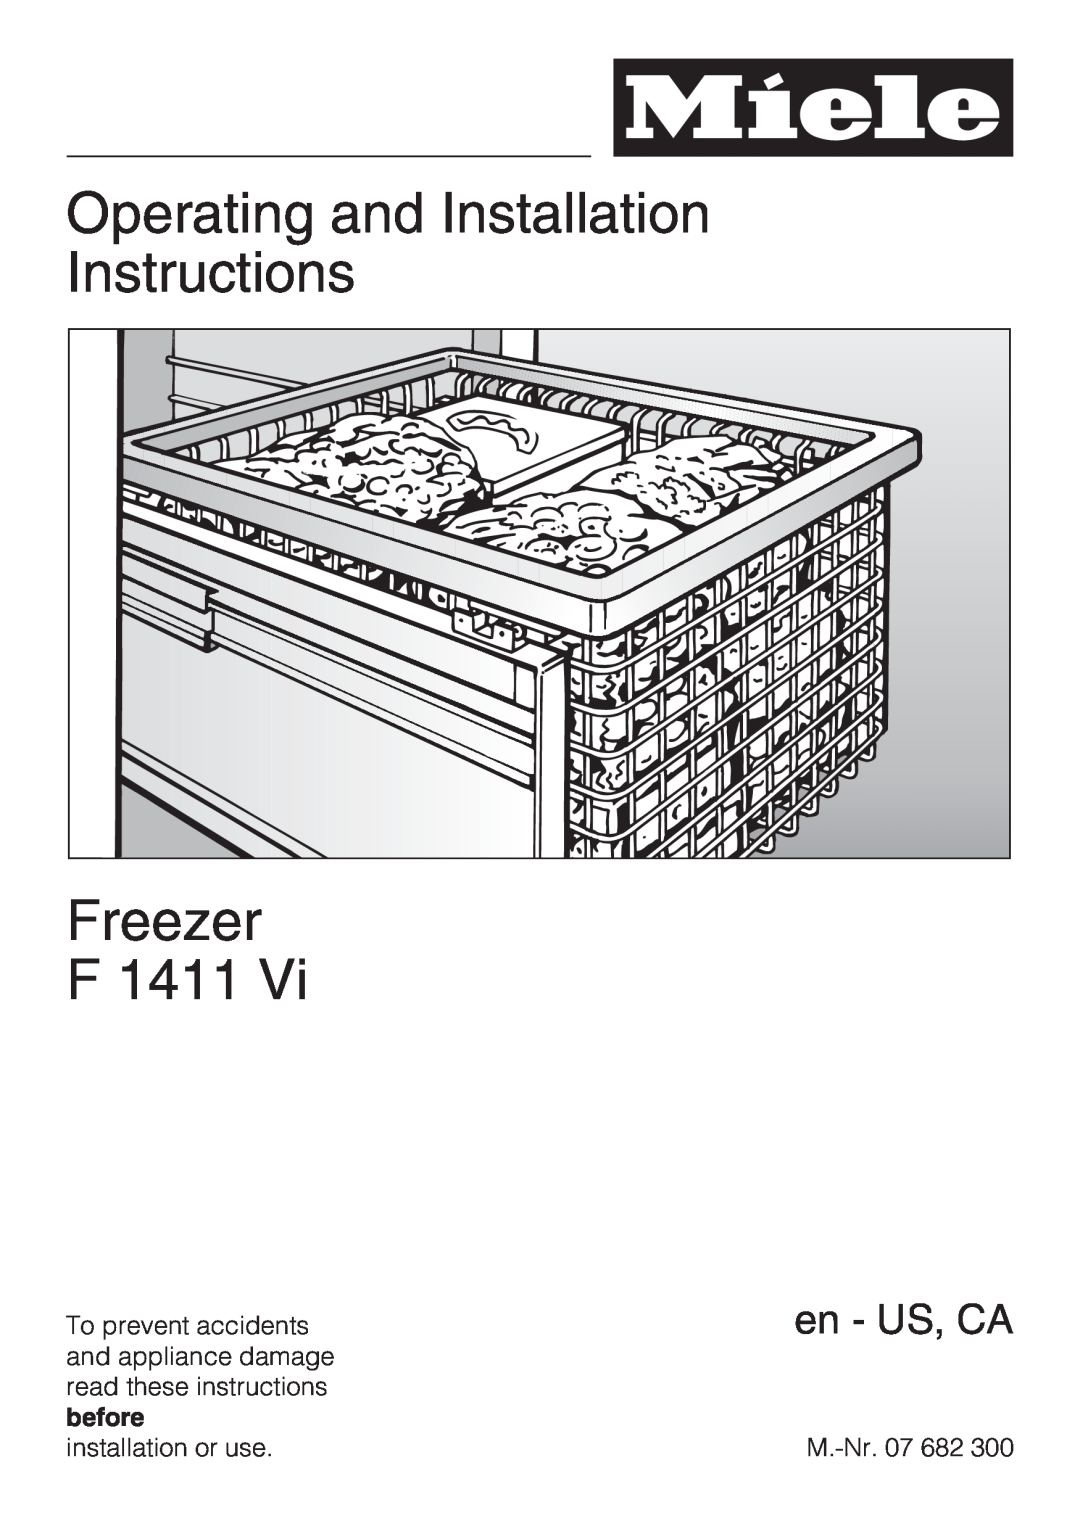 Miele F1411VI installation instructions Operating and Installation Instructions Freezer F, en - US, CA 